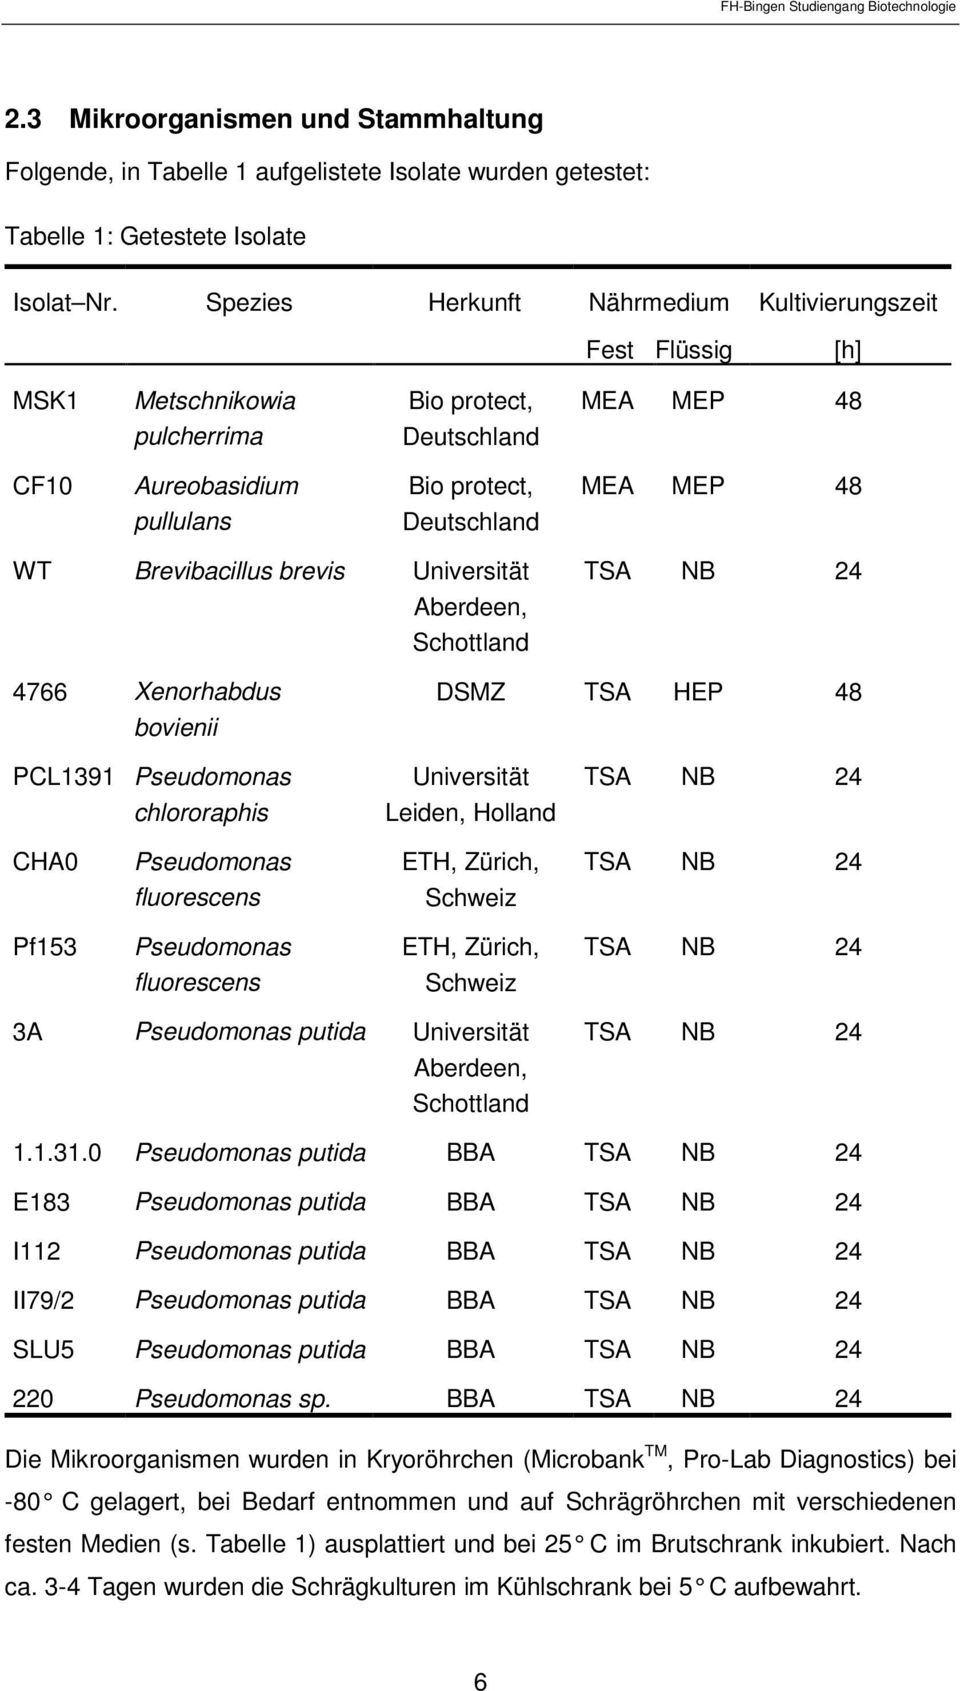 Brevicillus revis Universität Aerdeen, Schottlnd TSA NB 24 4766 Xenorhdus ovienii DSMZ TSA HEP 48 PCL1391 Pseudomons chlororphis Universität Leiden, Hollnd TSA NB 24 CHA0 Pseudomons fluorescens ETH,